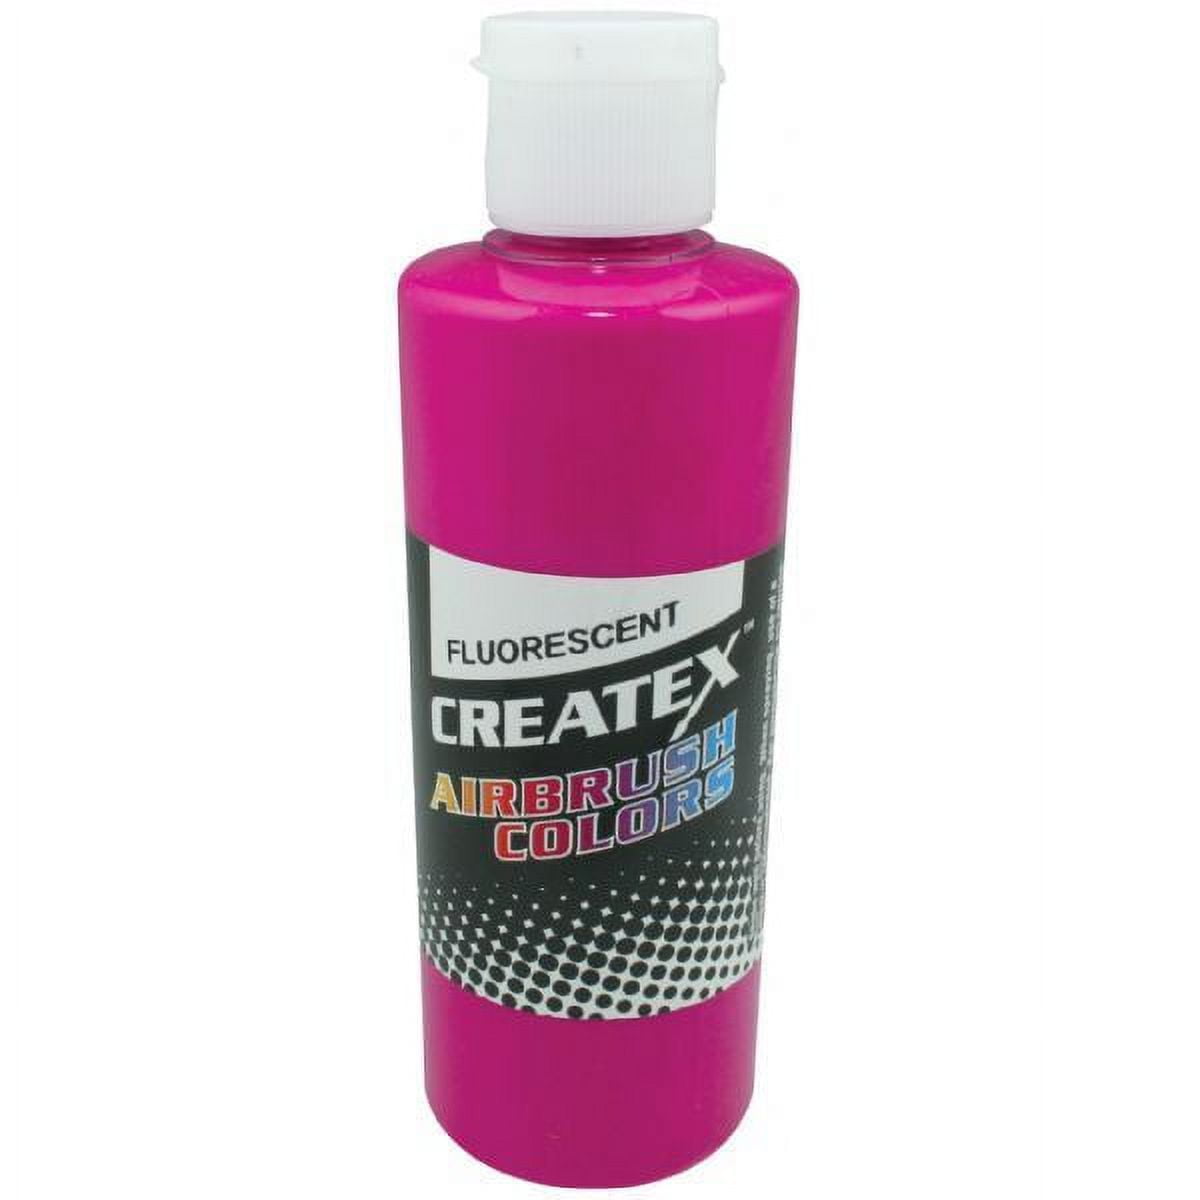 Createx Airbrush Colors 2oz Fluorescent Hot Pink